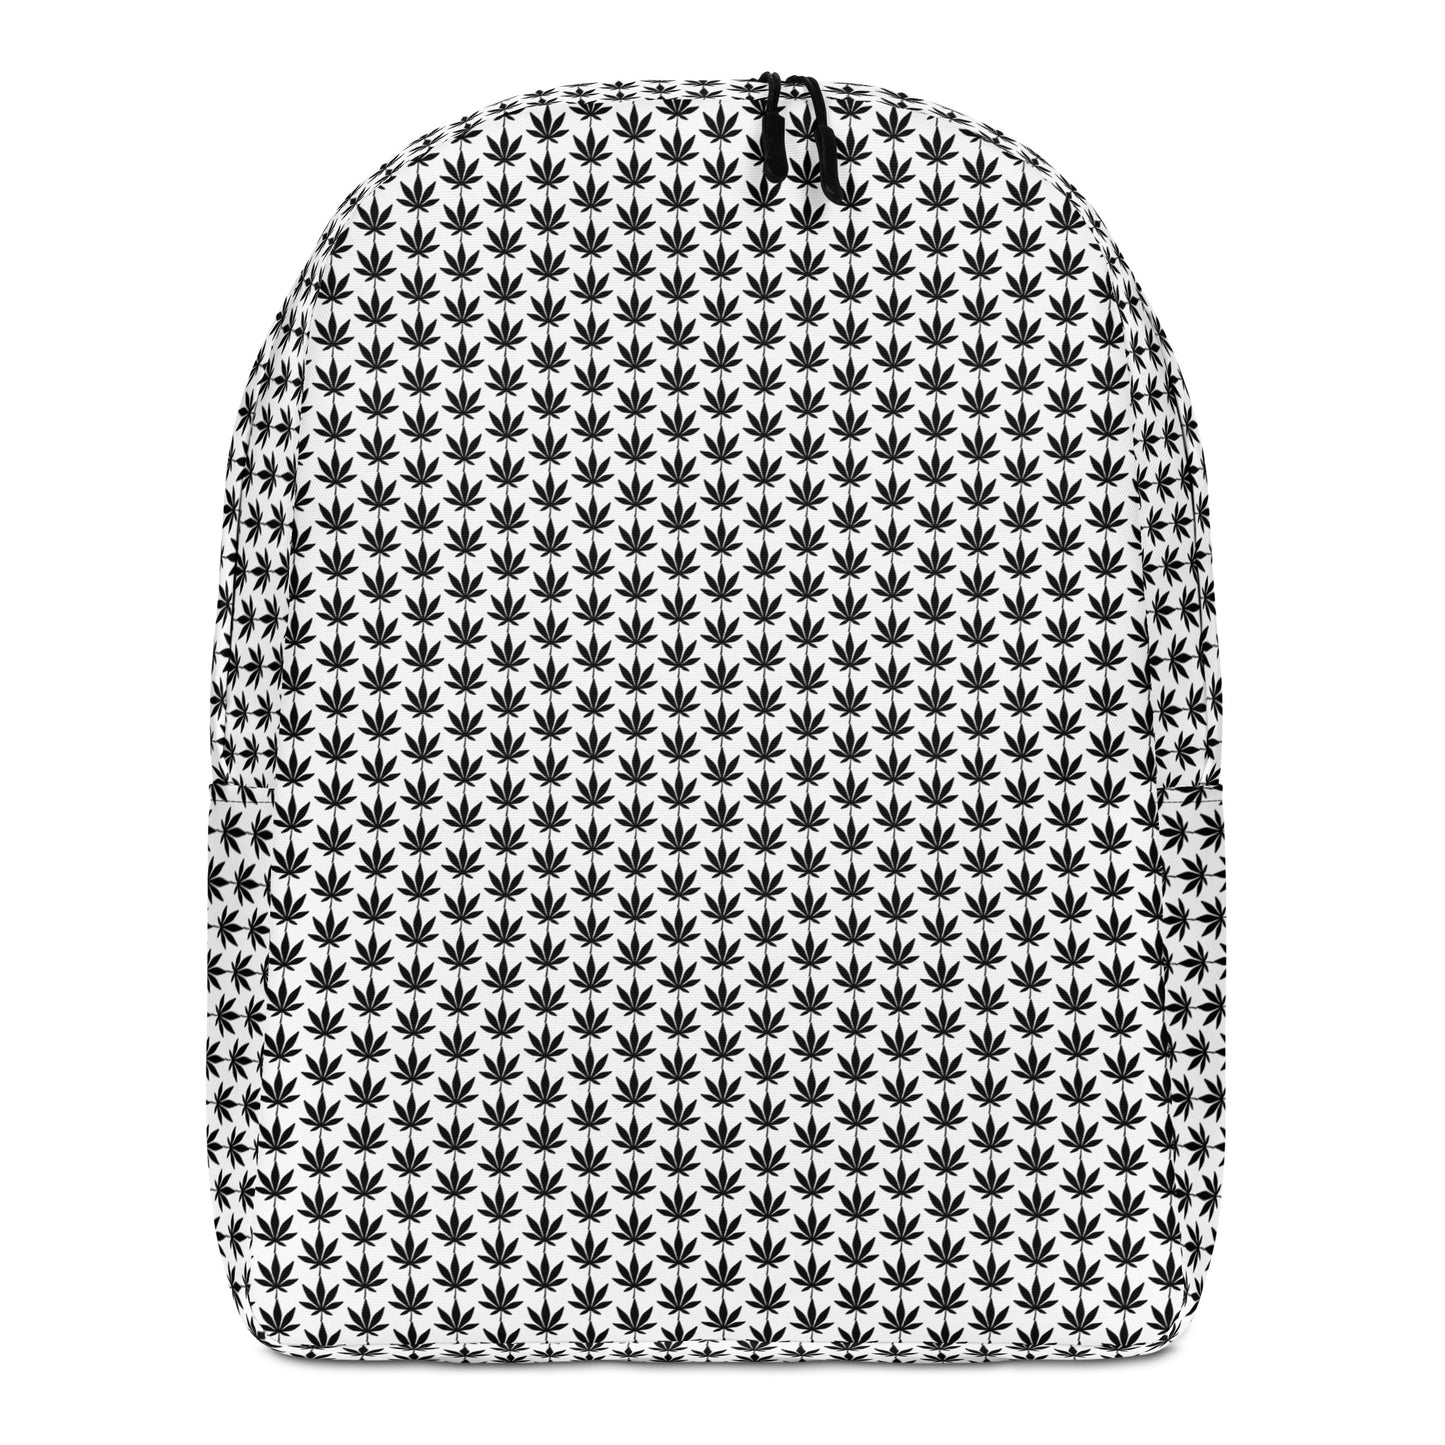 Black And White Minimalist Backpack